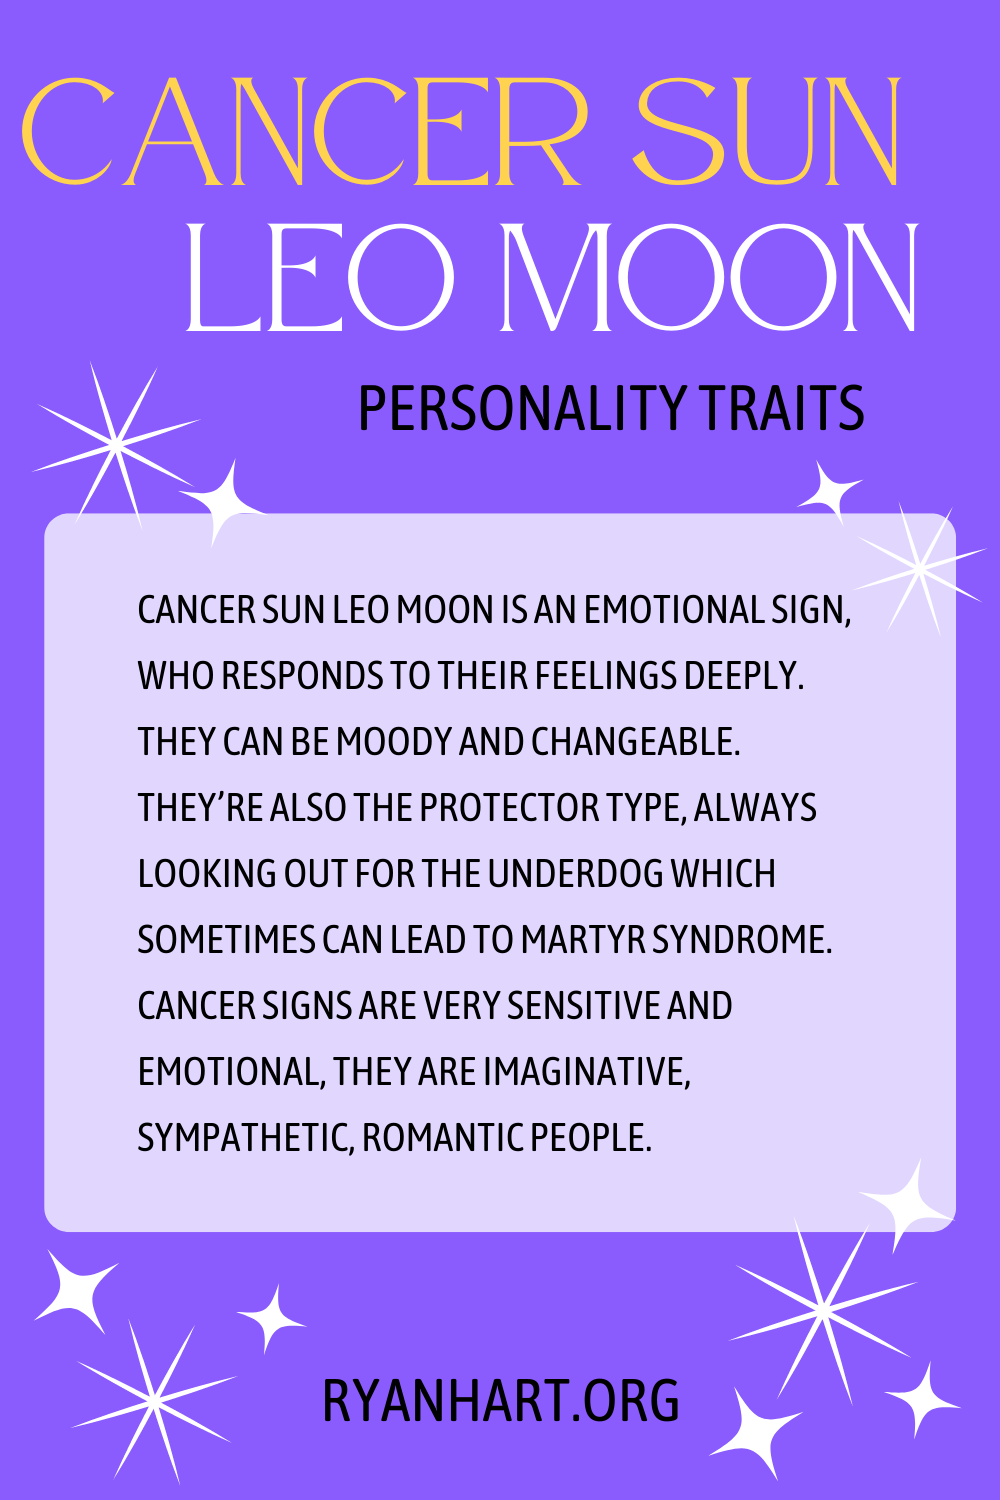 Cancer Sun Leo Moon Personality Traits - BSS news